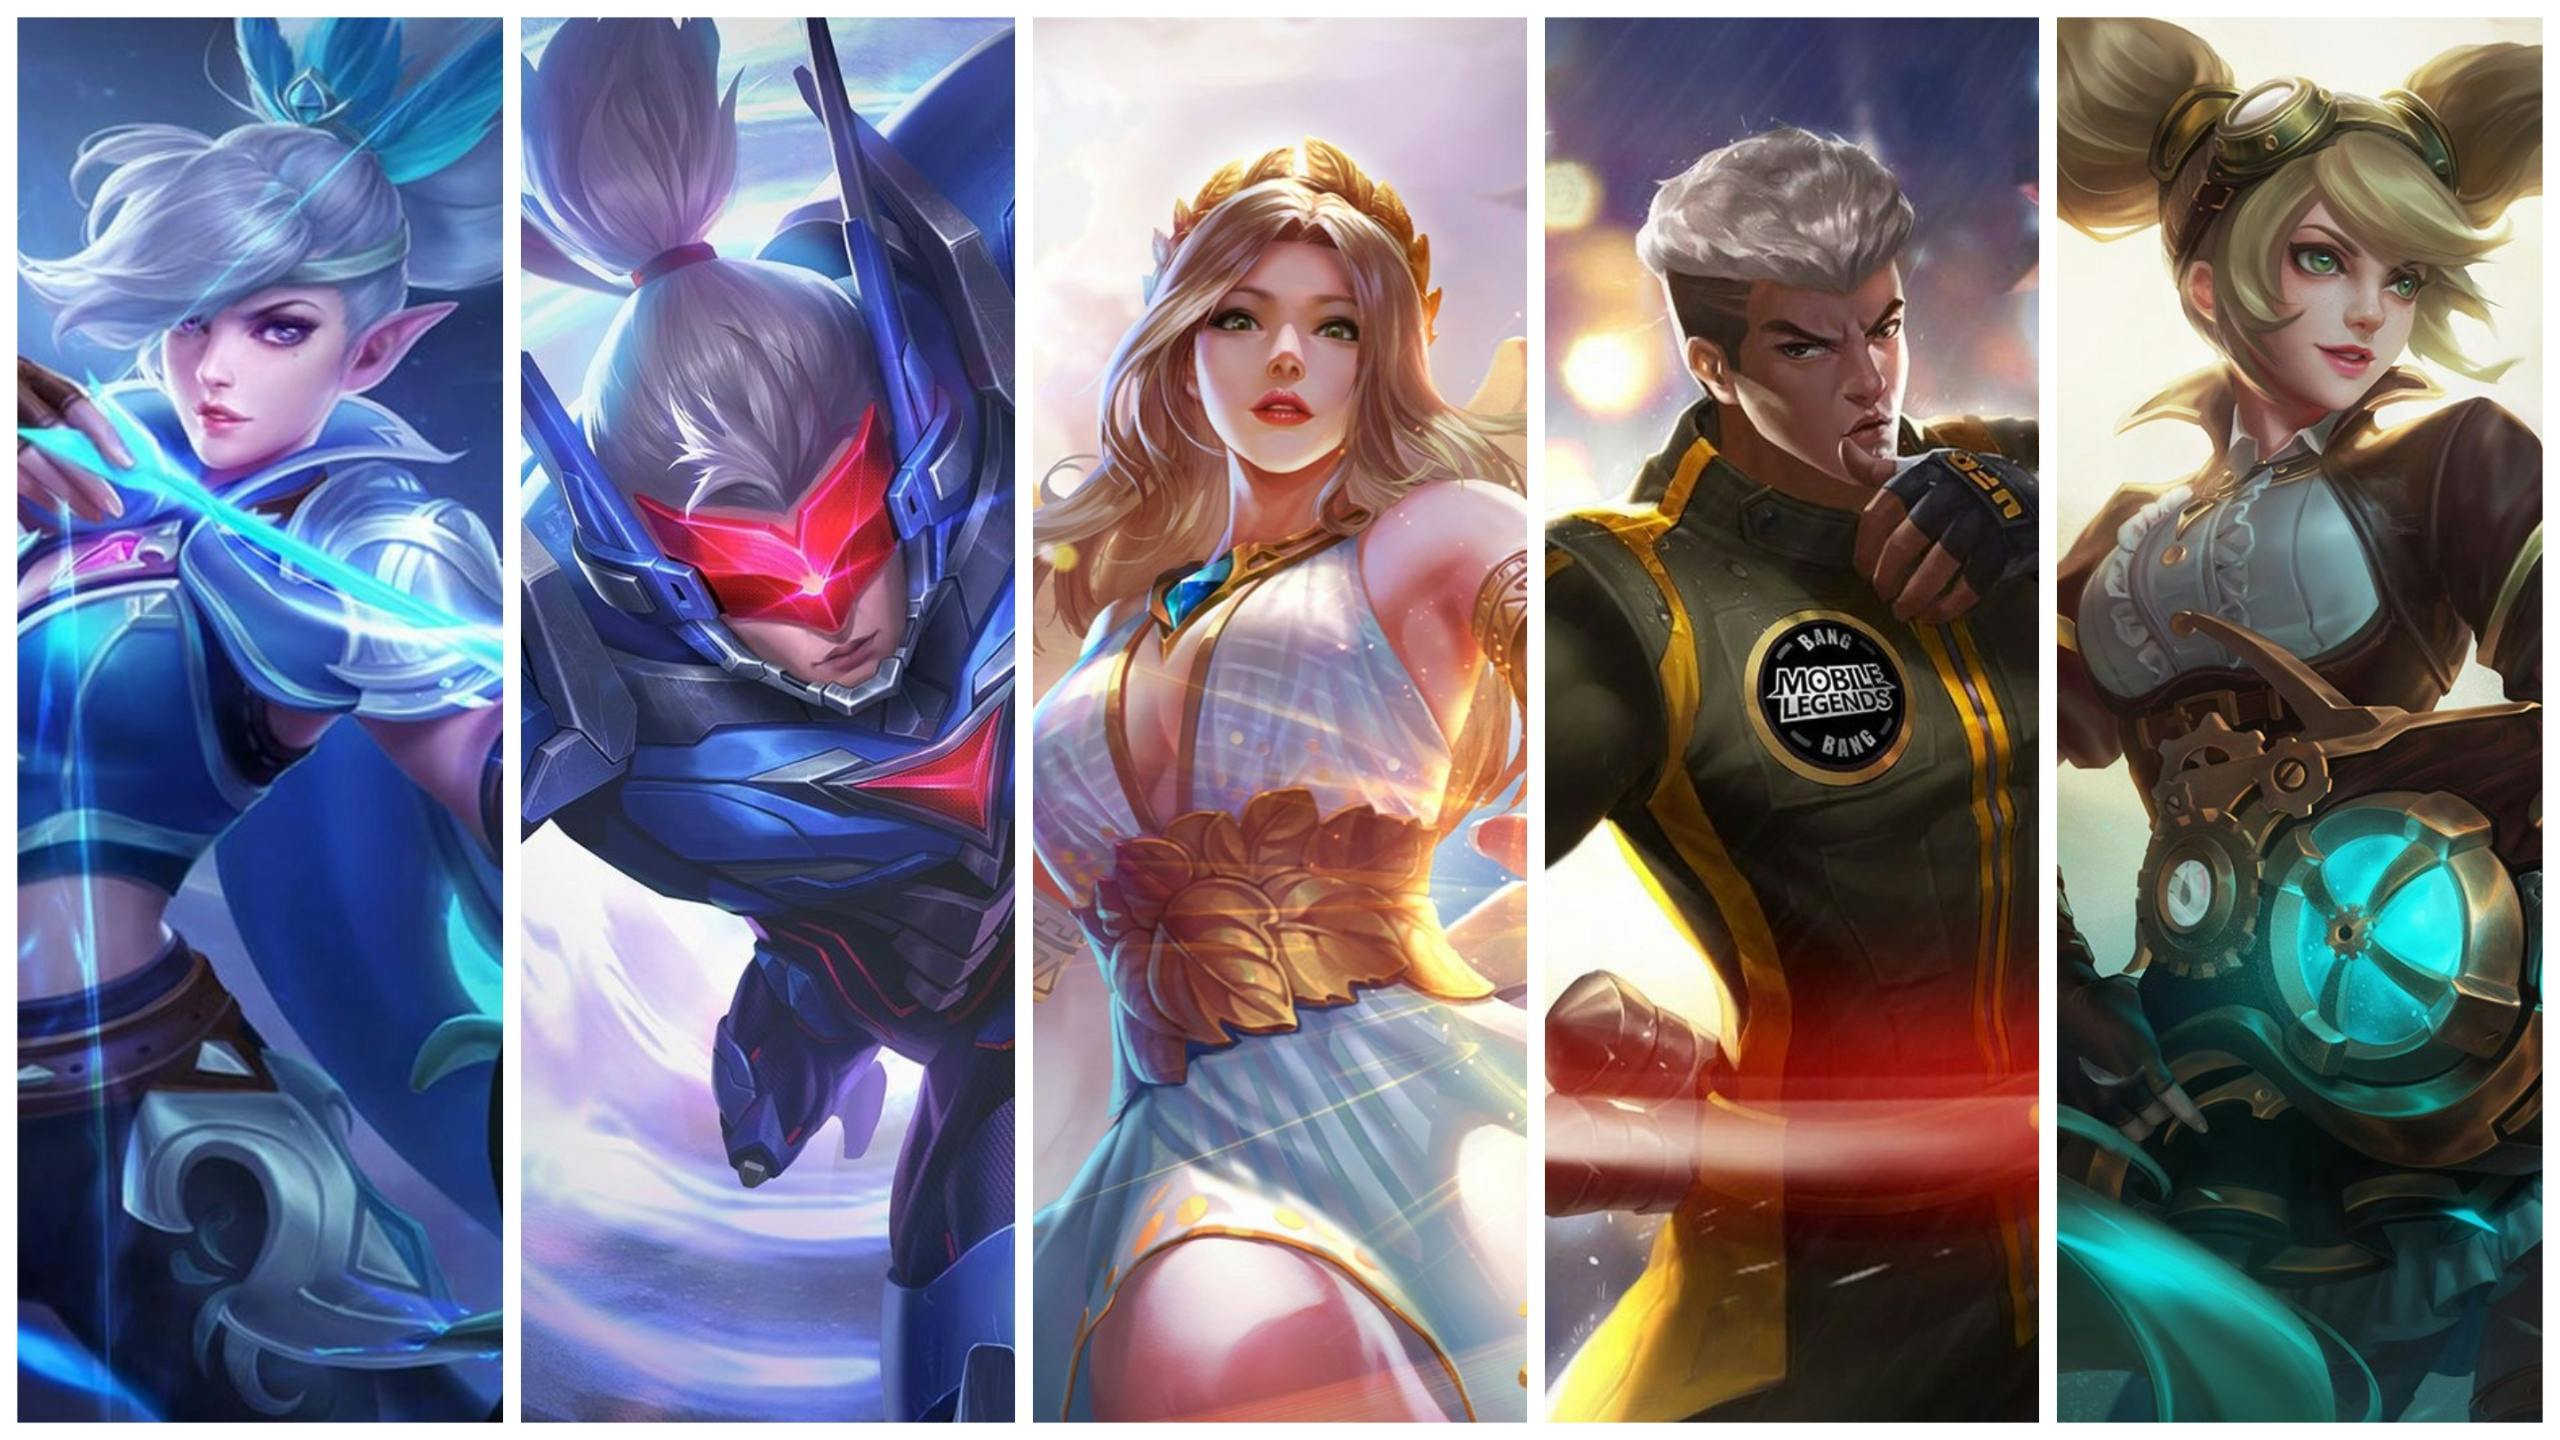 Mobile Legends heroes released in 2016